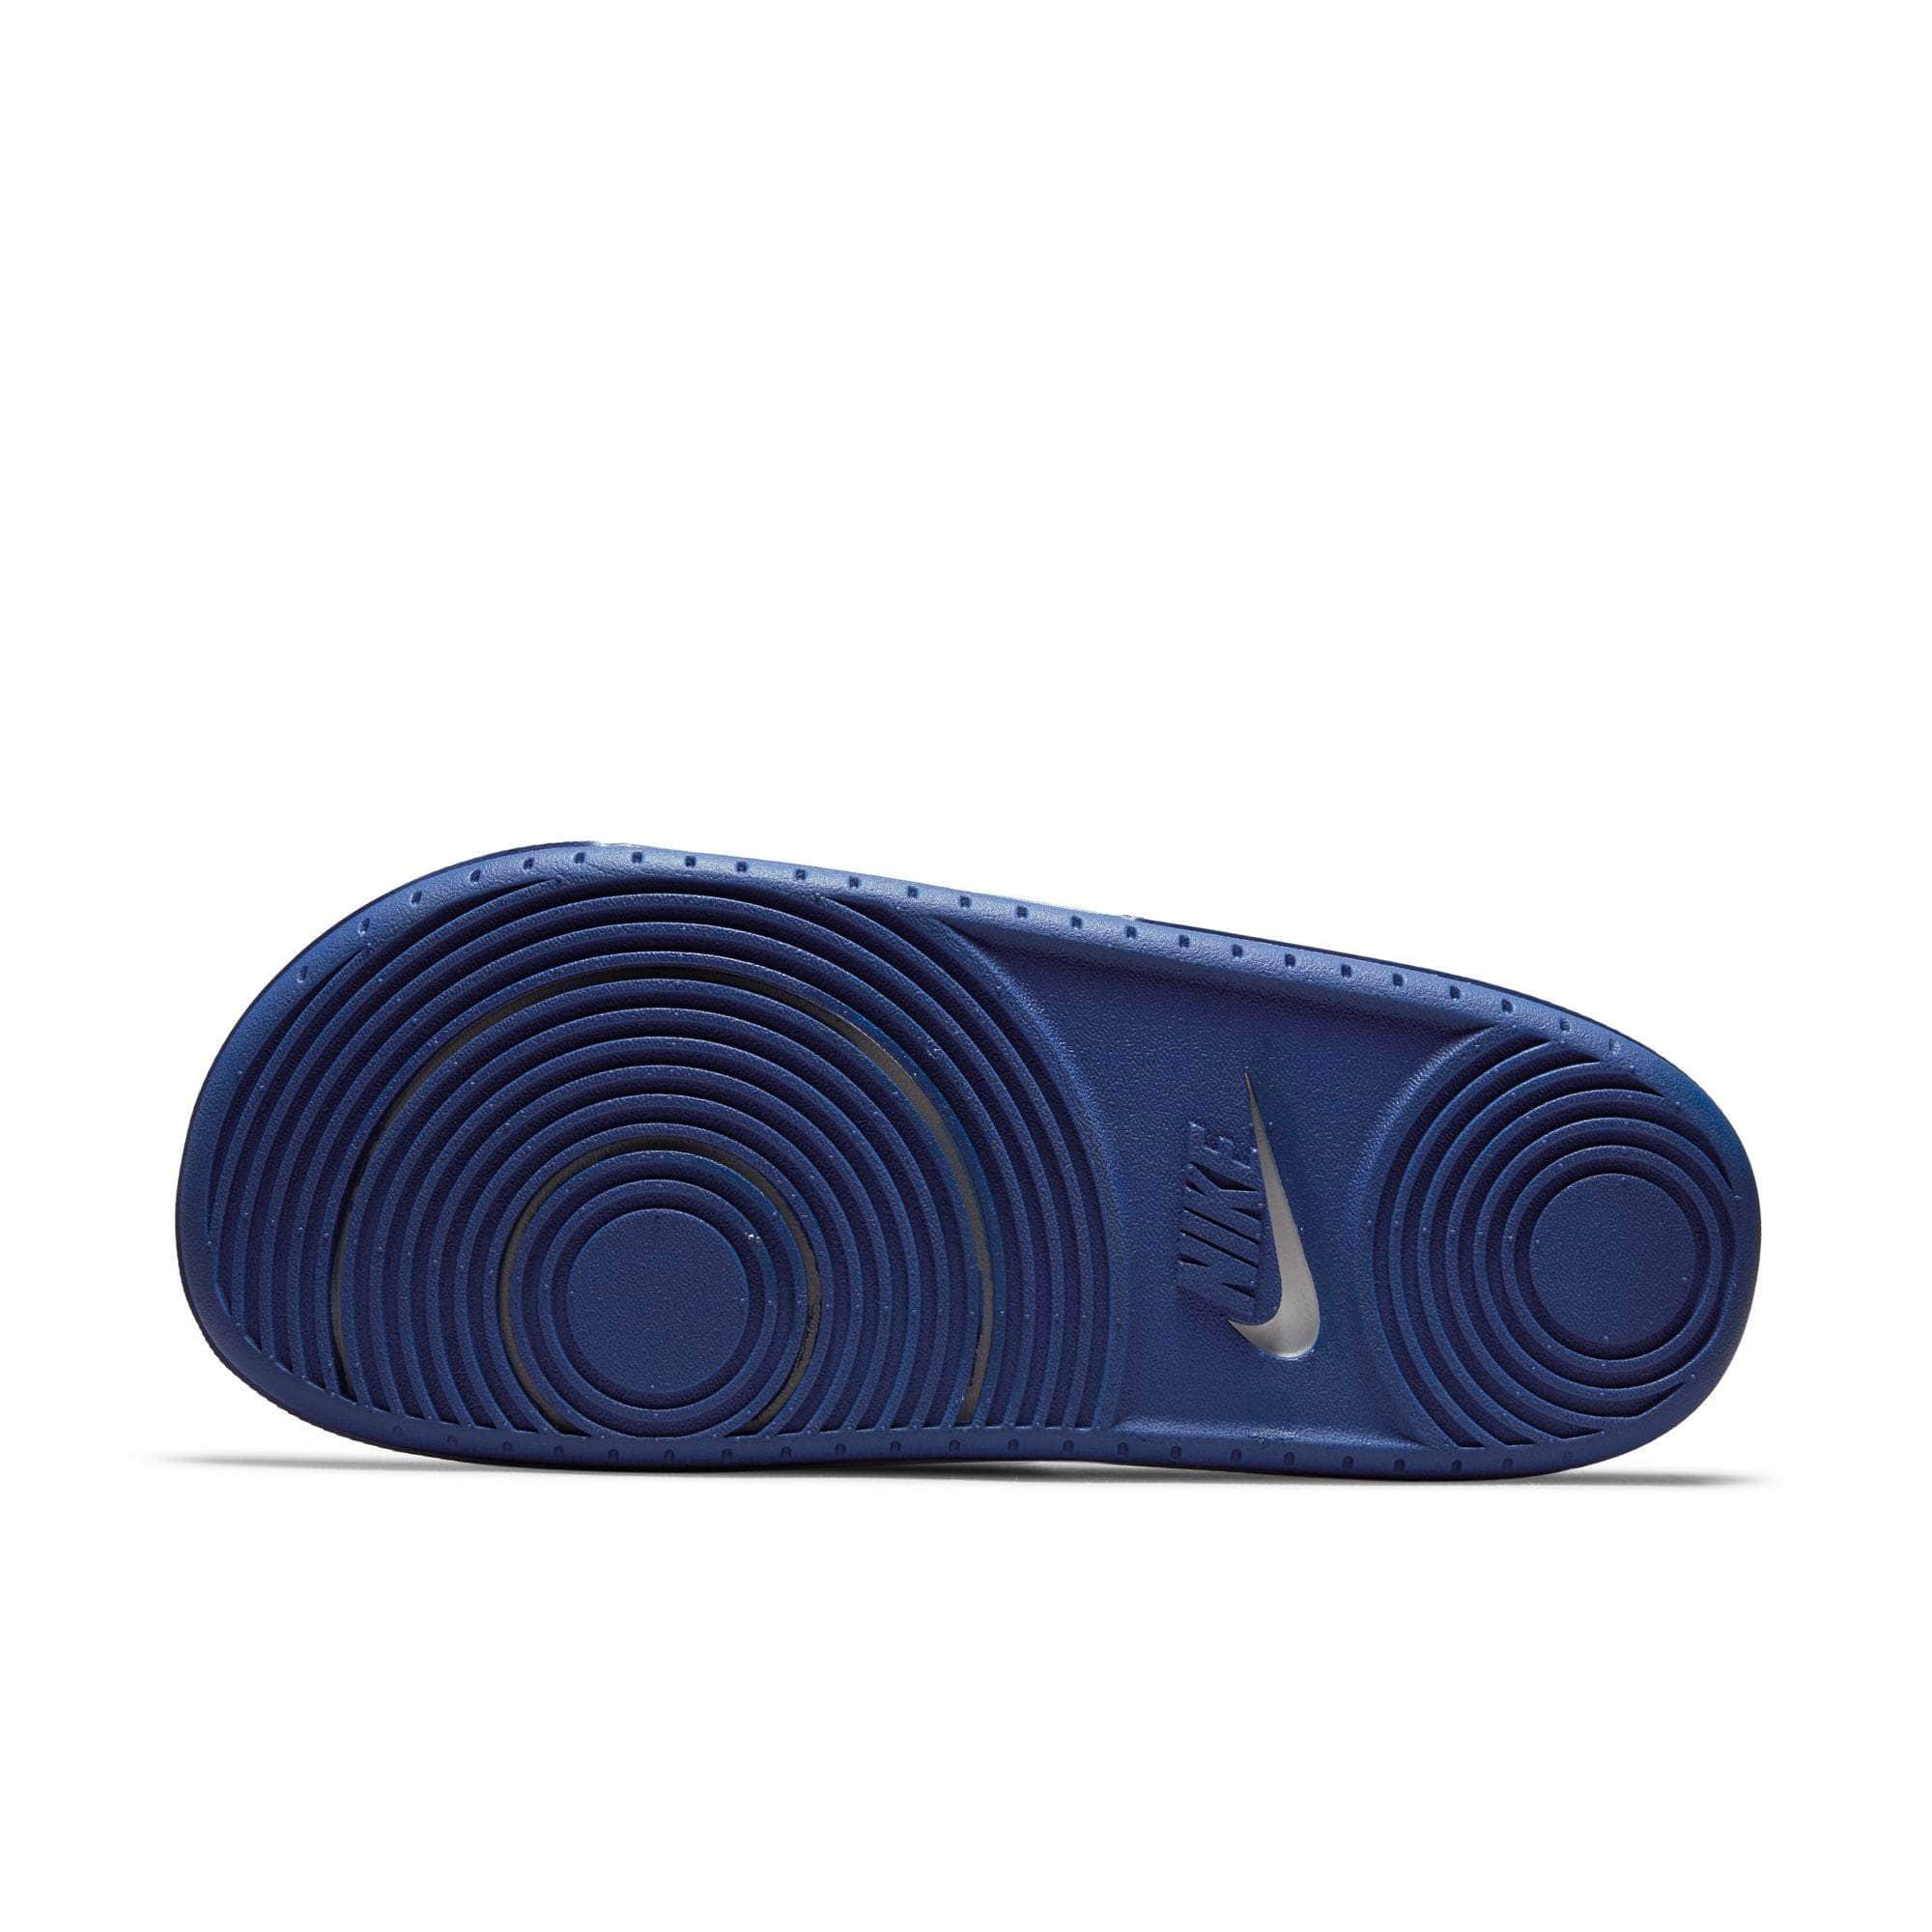 NIKE FOOTWEAR Nike Offcourt Slides - Men's